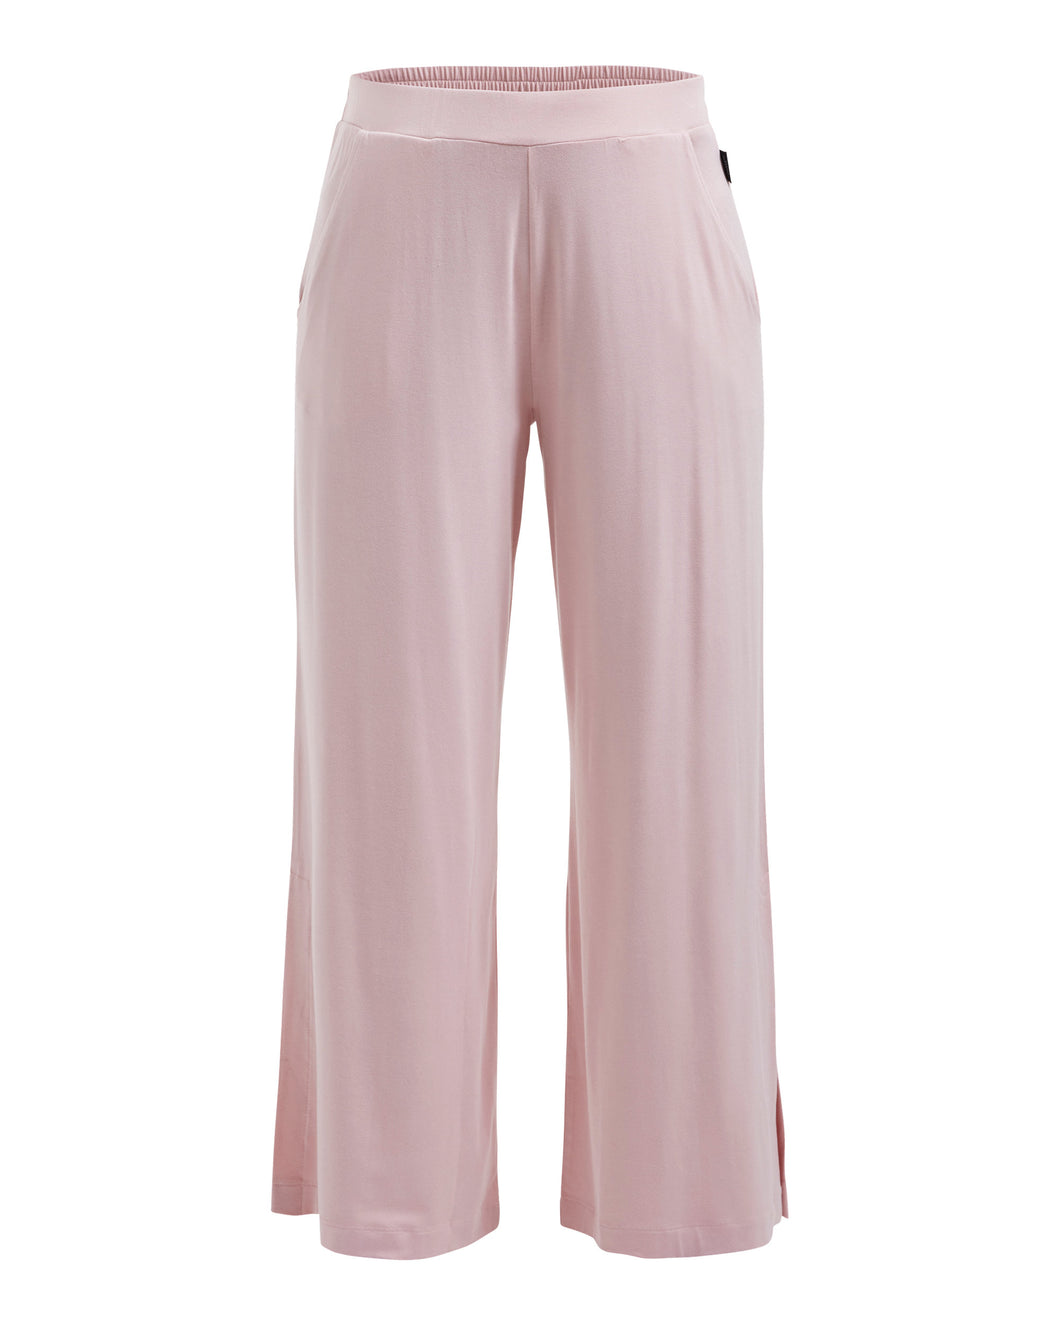 Holebrook Sweden Bianca Lounge Pants - Flamingo Pink